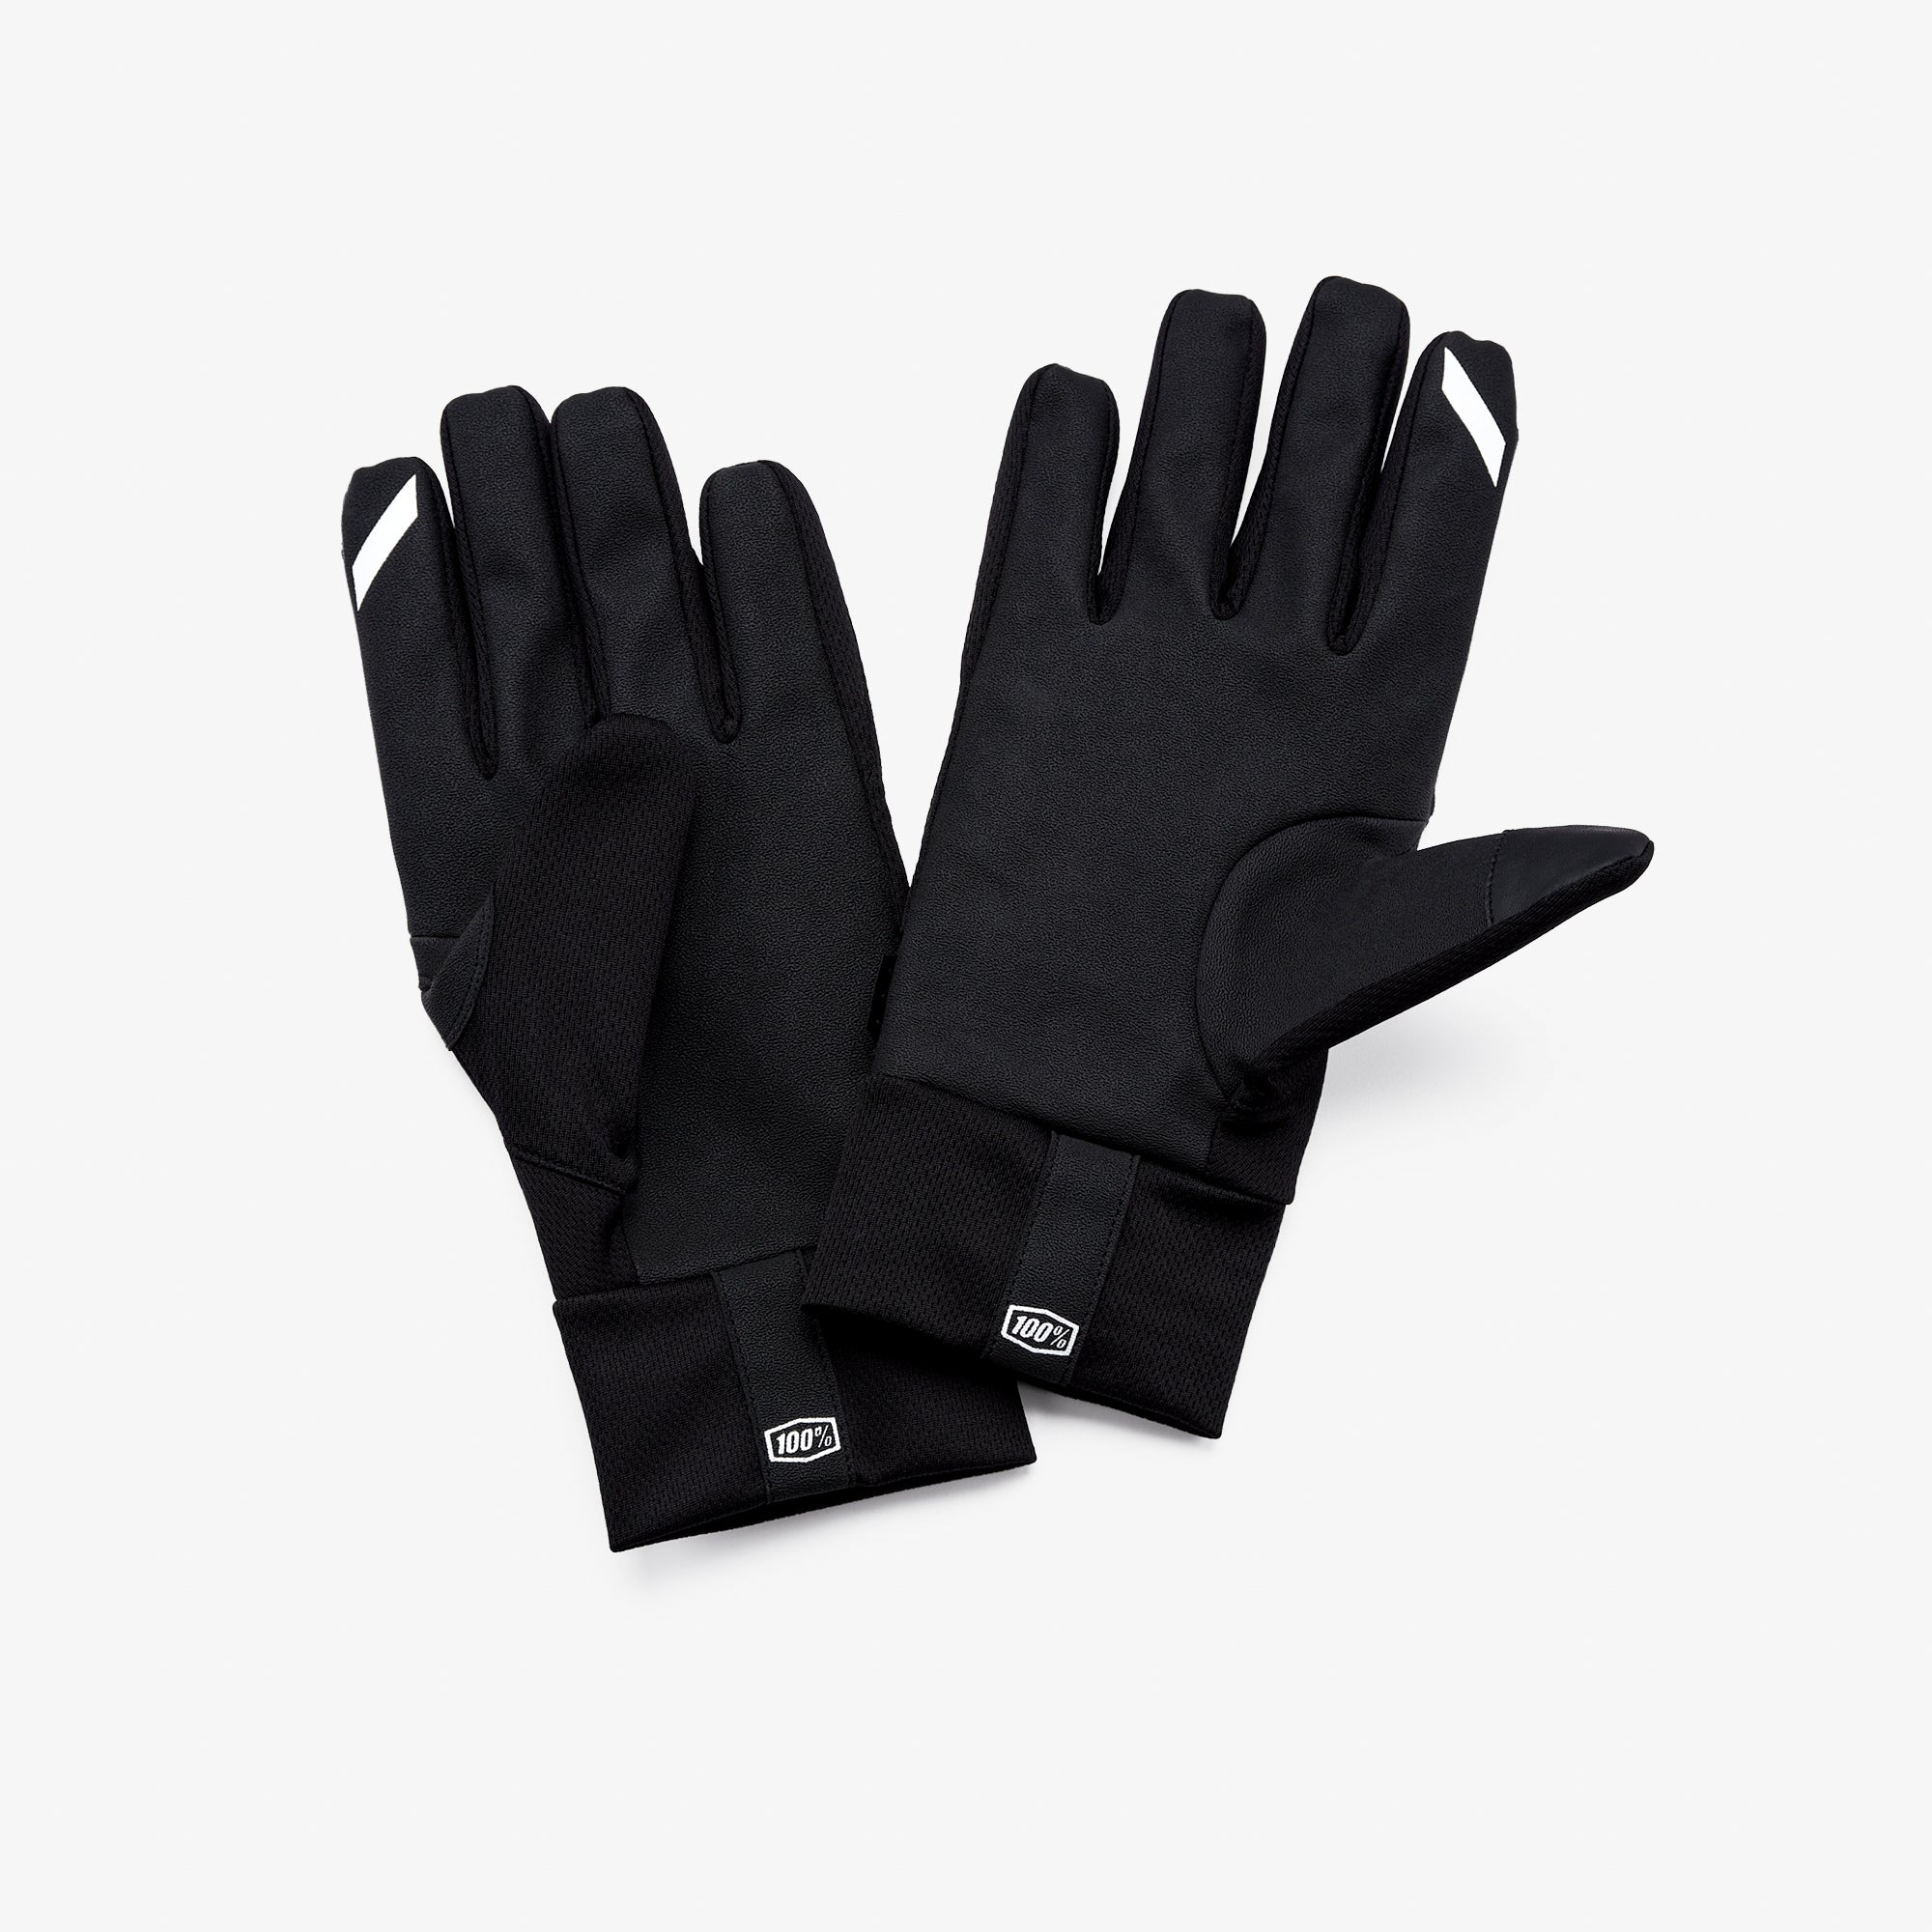 HYDROMATIC Gloves Black